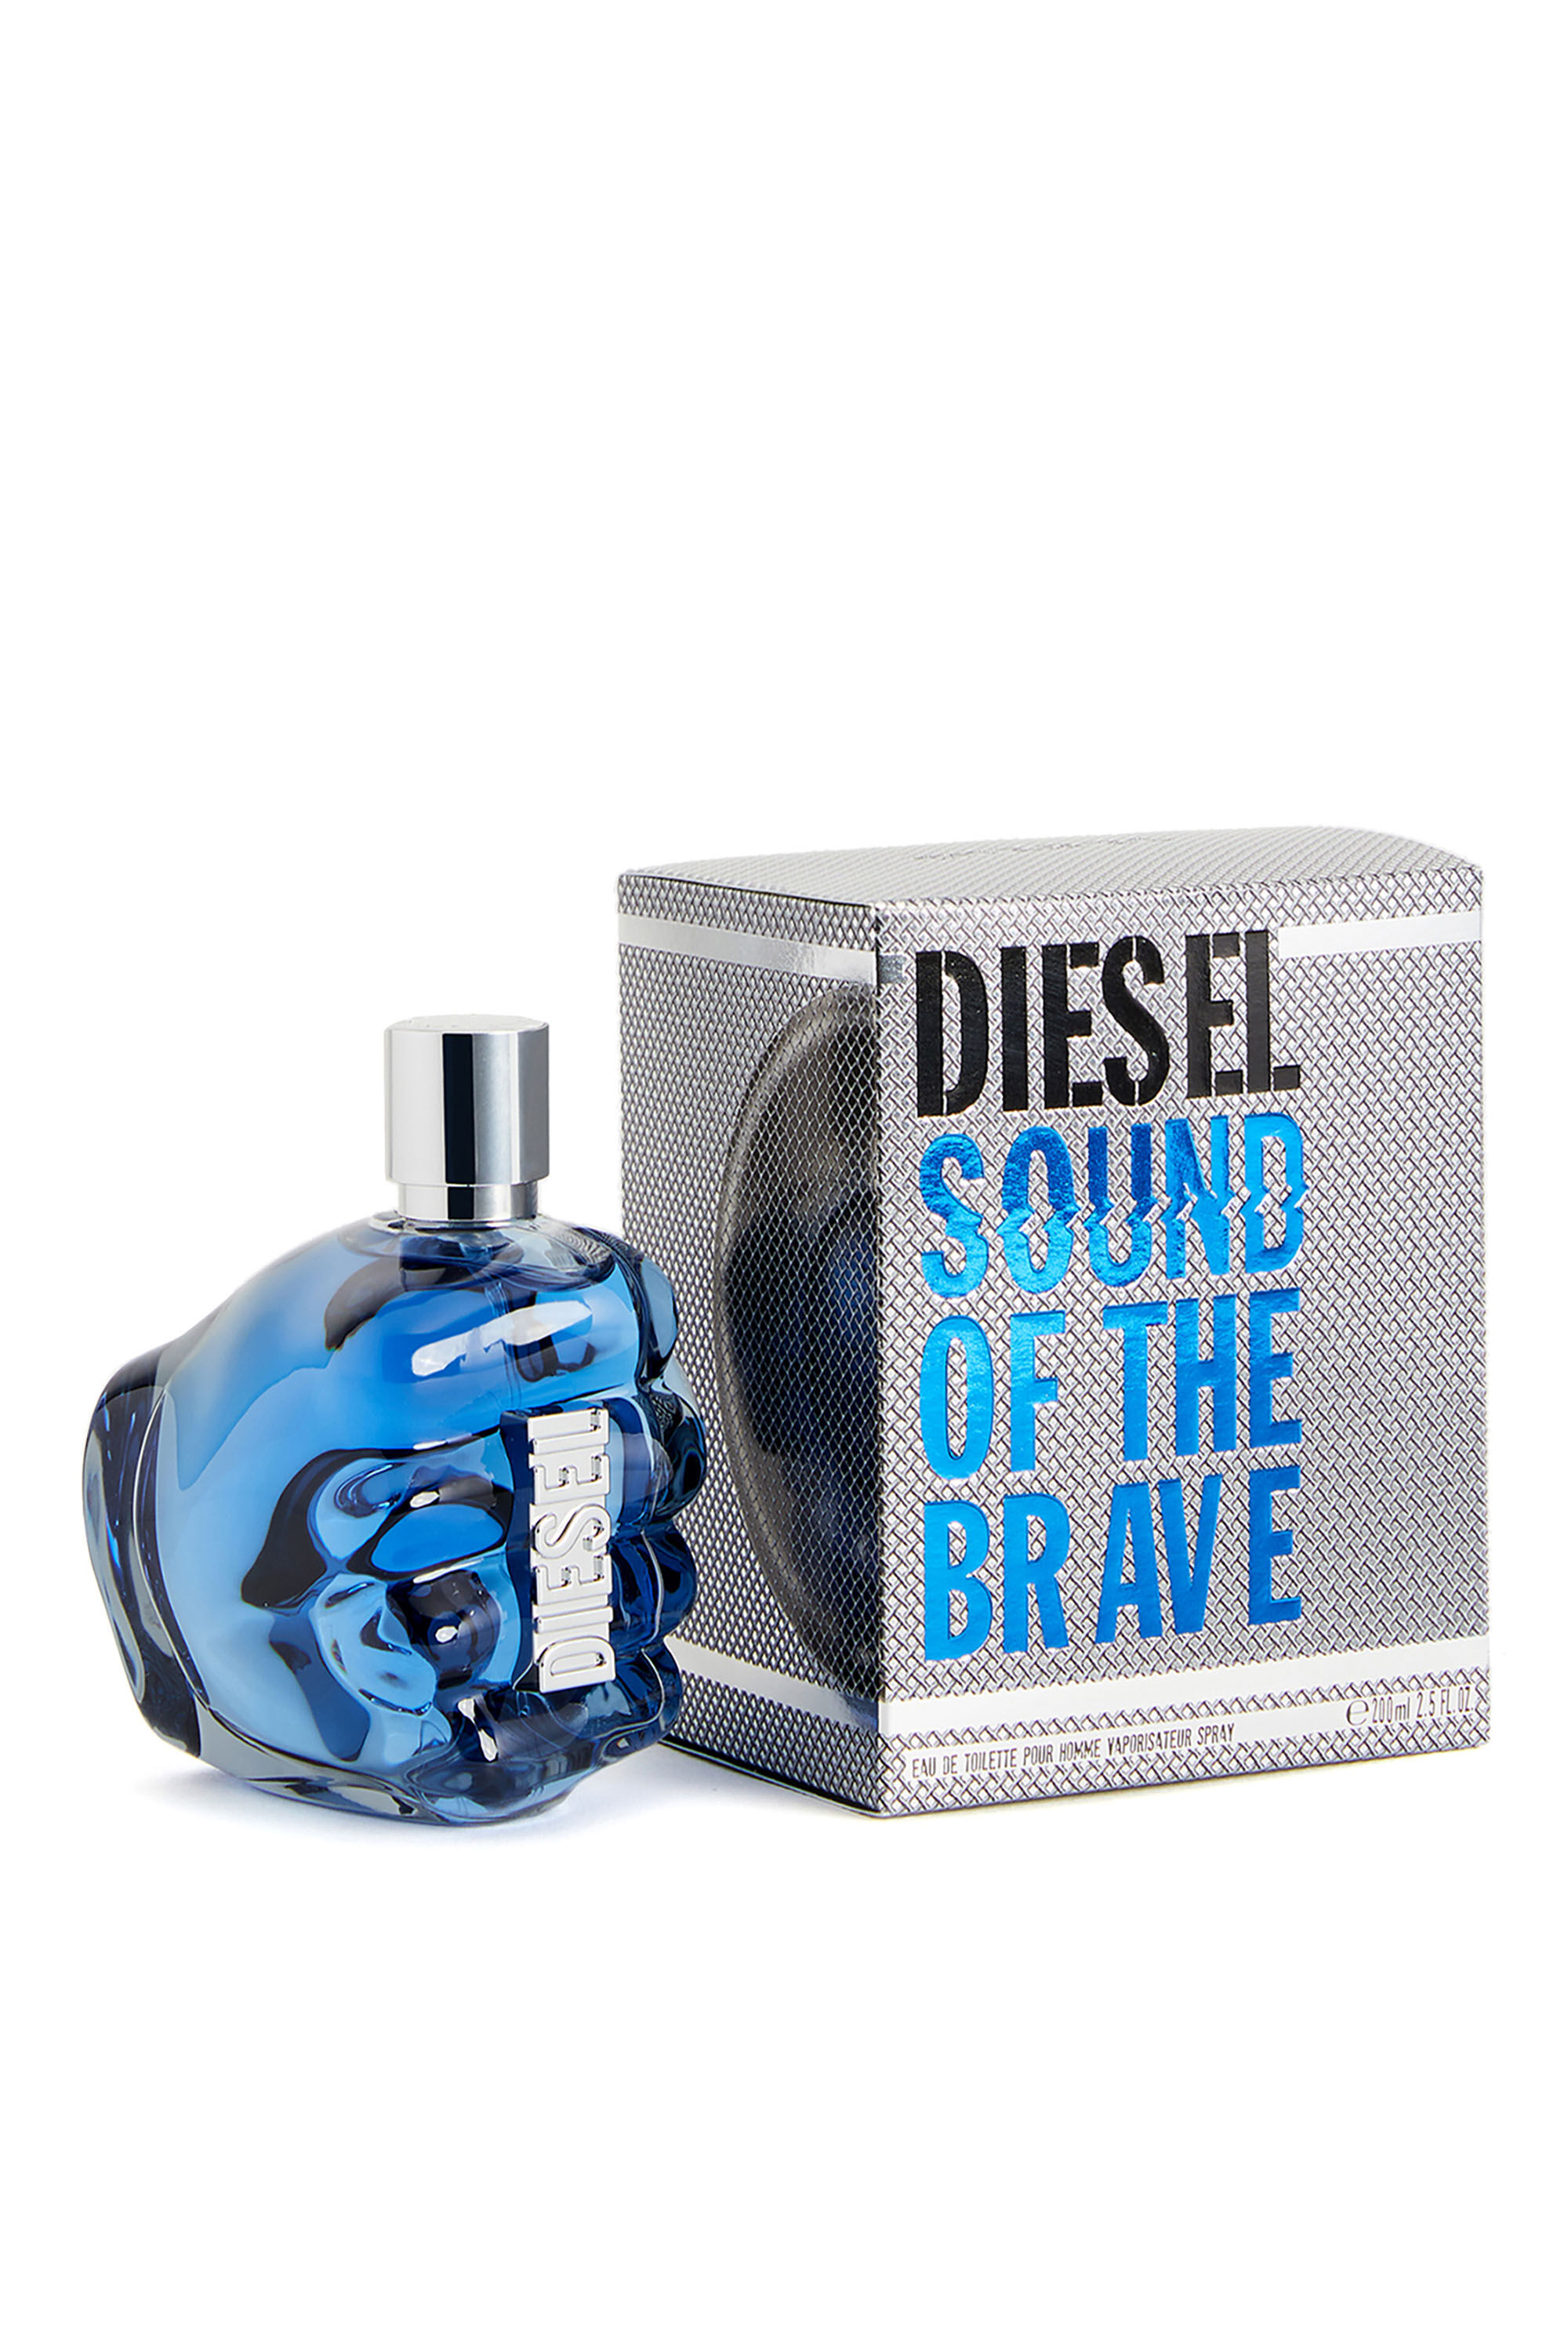 Diesel - SOUND OF THE BRAVE 200ML, Blau - Image 3